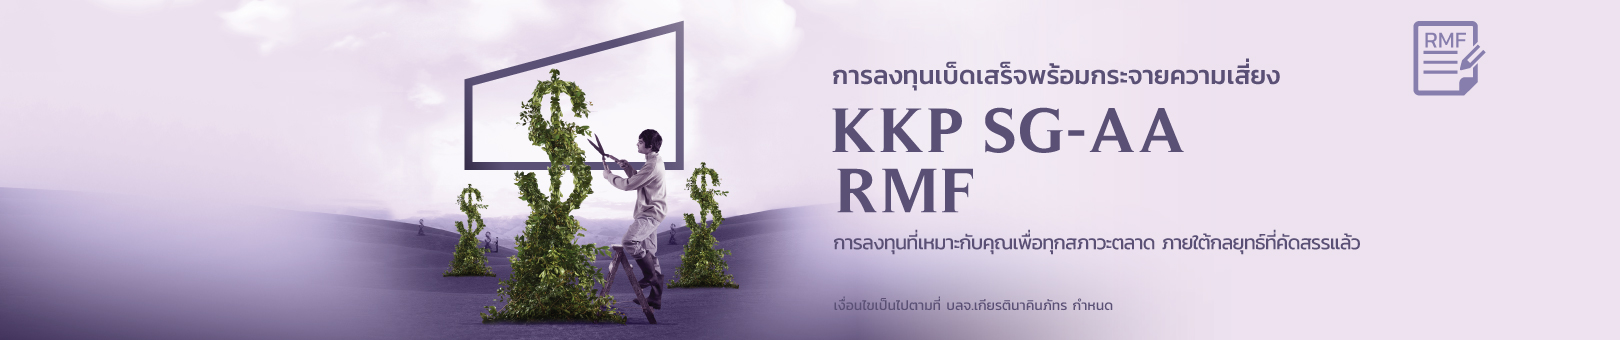 KKP_SG-AA-RMF_1620x340